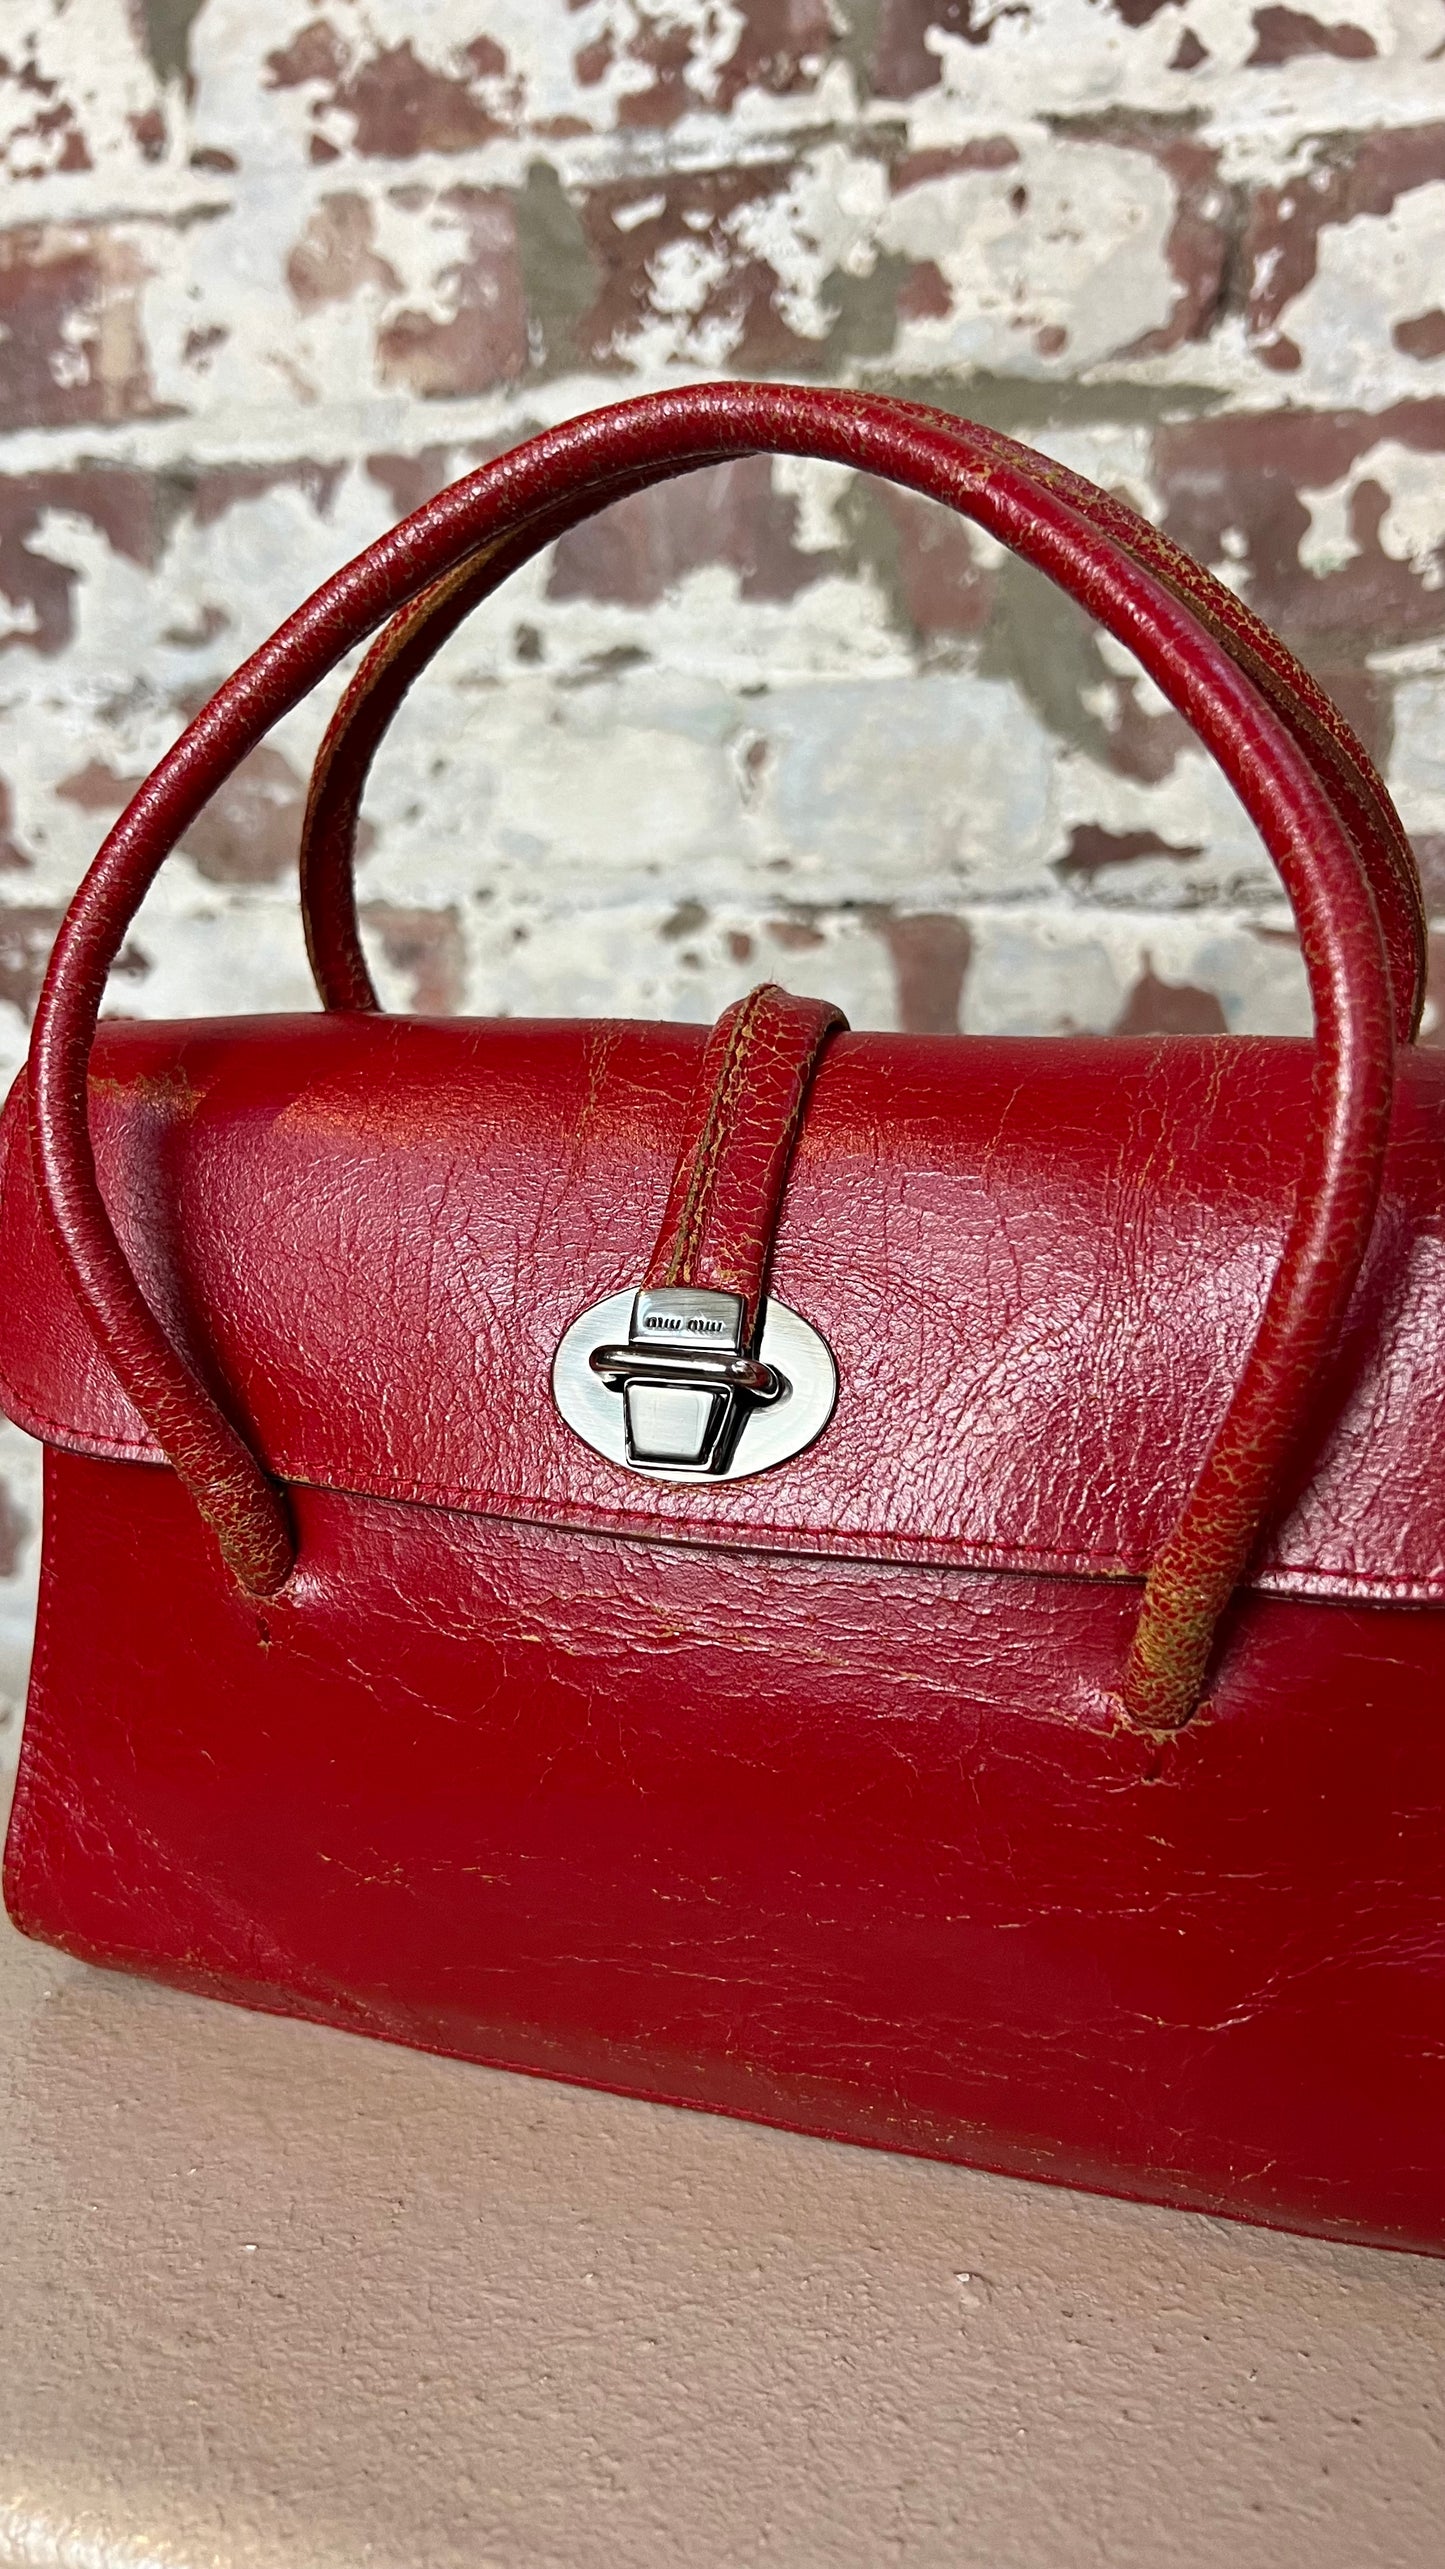 Miu Miu Red Cracked Leather Handbag